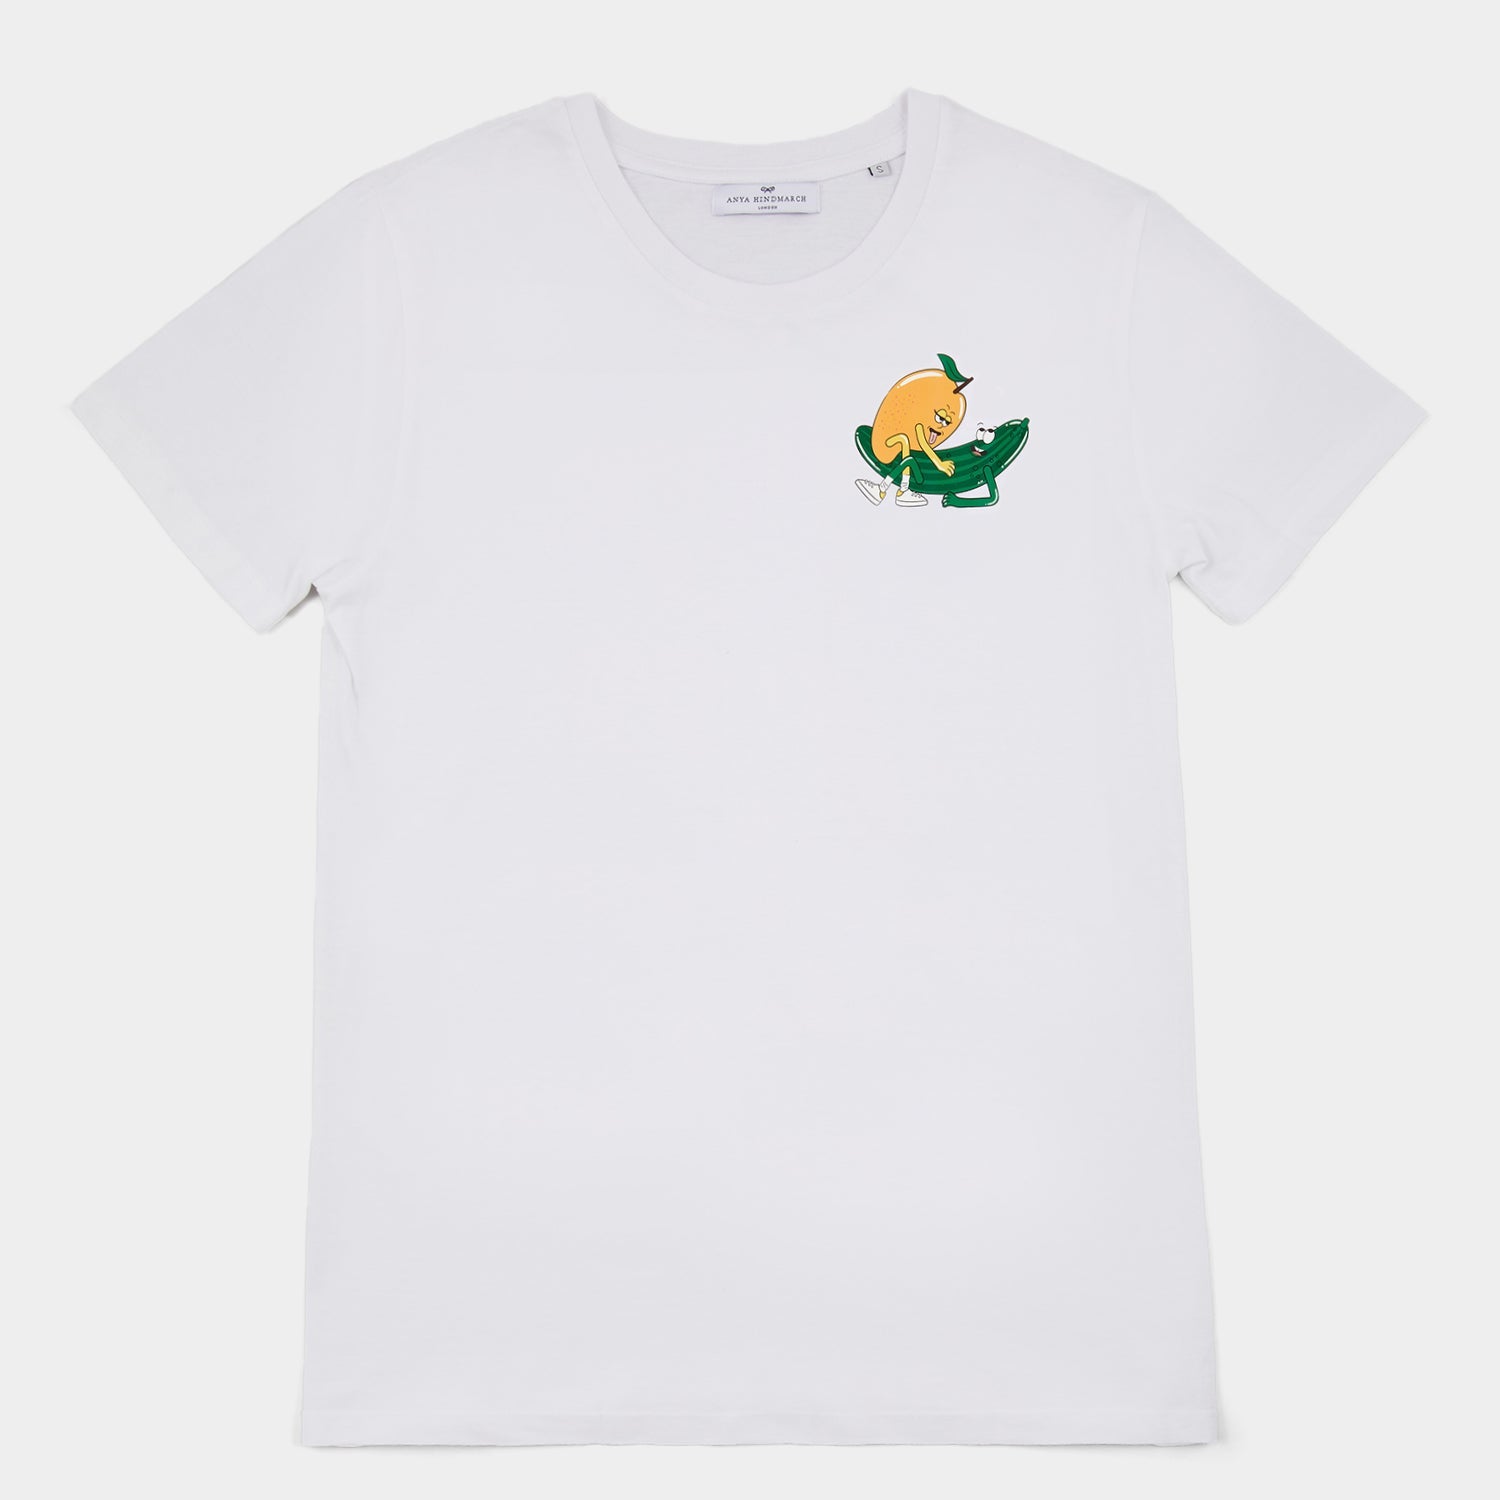 Mango & Cucumber T-Shirt - Small -

                  

                  Anya Hindmarch EU
